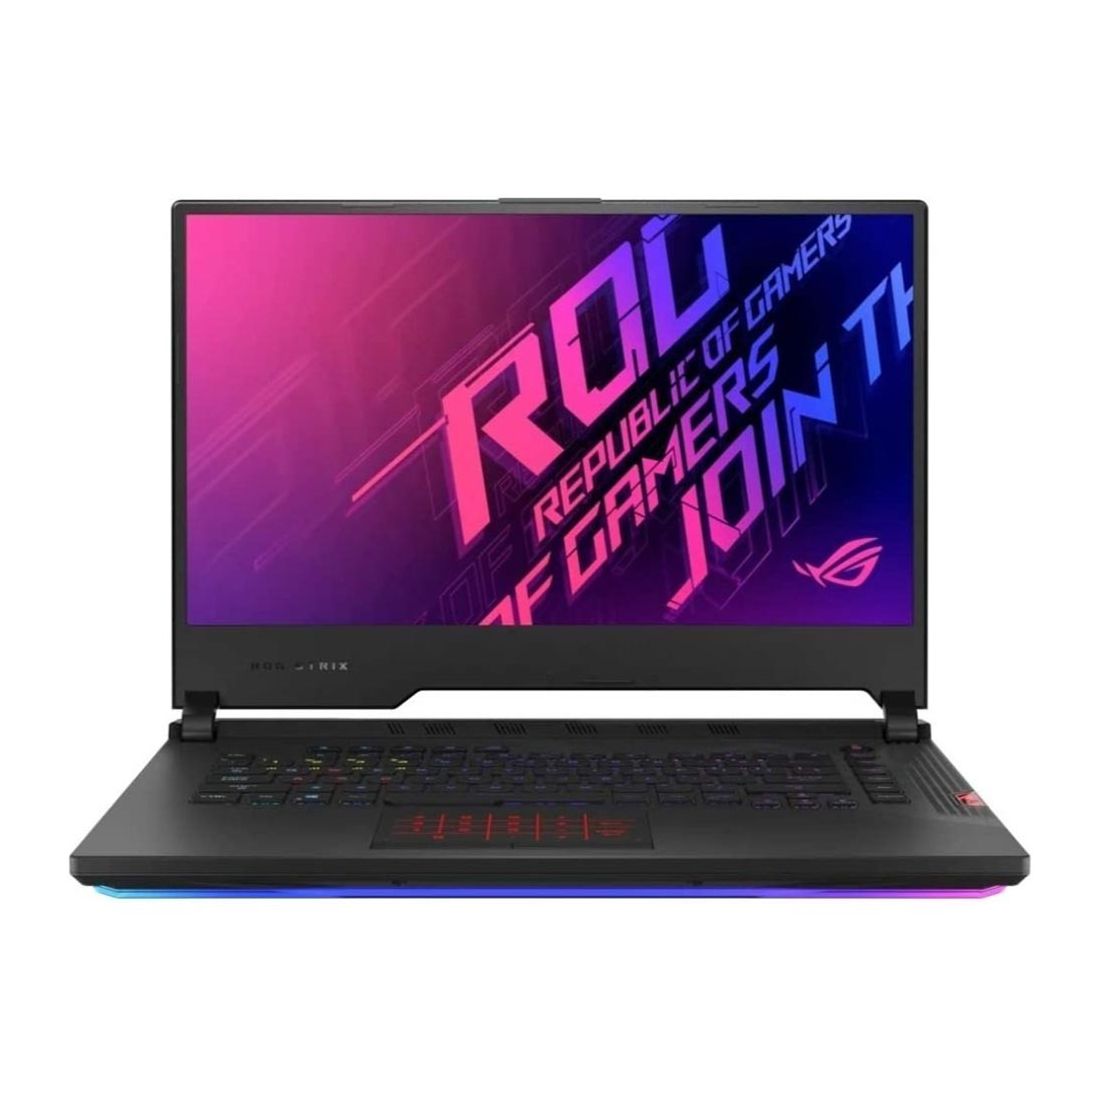 ASUS ROG Strix G512LU-HN161T Gaming Laptop i7-10750H/16GB/1TB SSD/NVIDIA GeForce GTX 1660 Ti 6GB/15.6 FHD/144Hz/Windows 10/Original Black